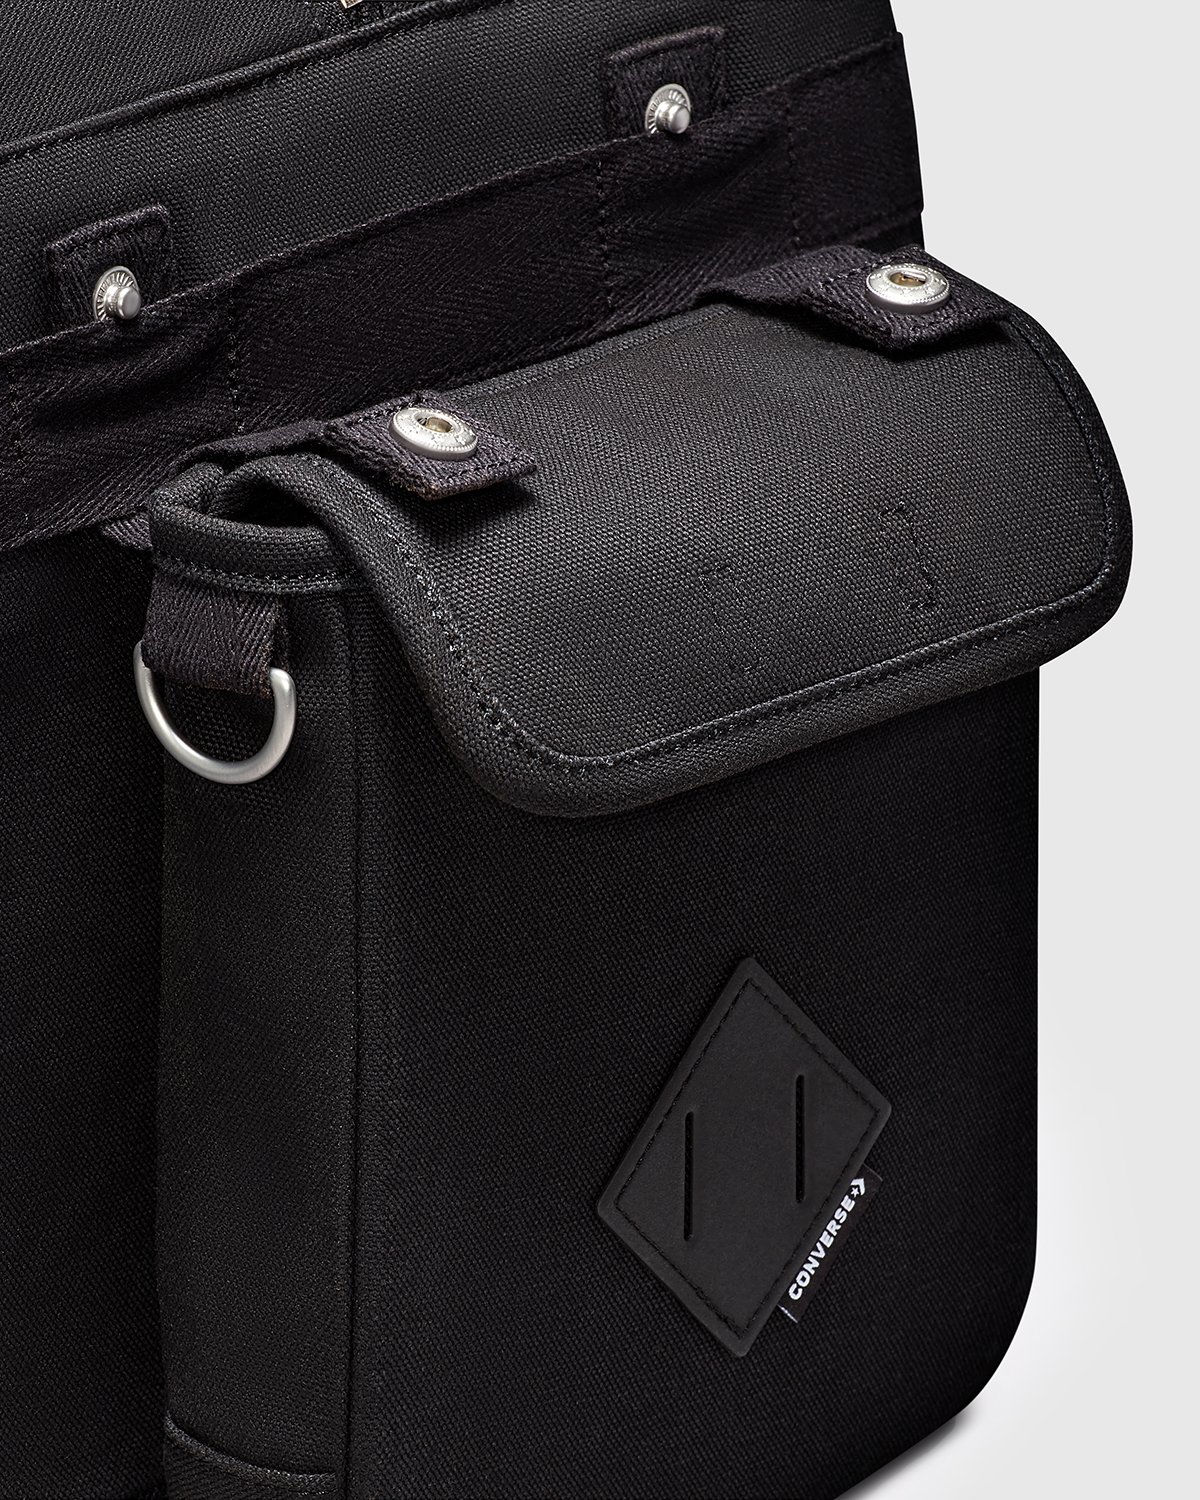 Converse x Joshua Vides - Basketball Utility Bag Black - Accessories - Black - Image 5